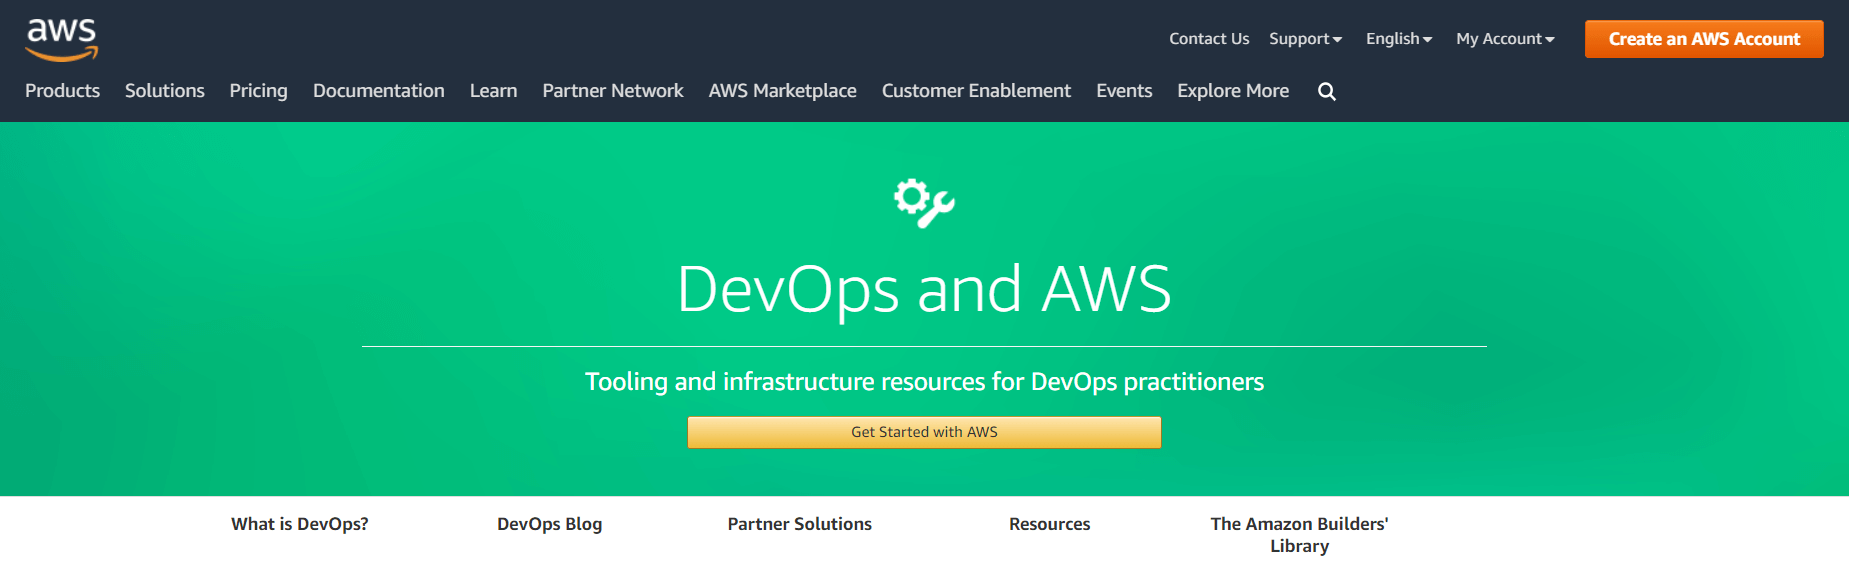 AWS DevOps Homepage